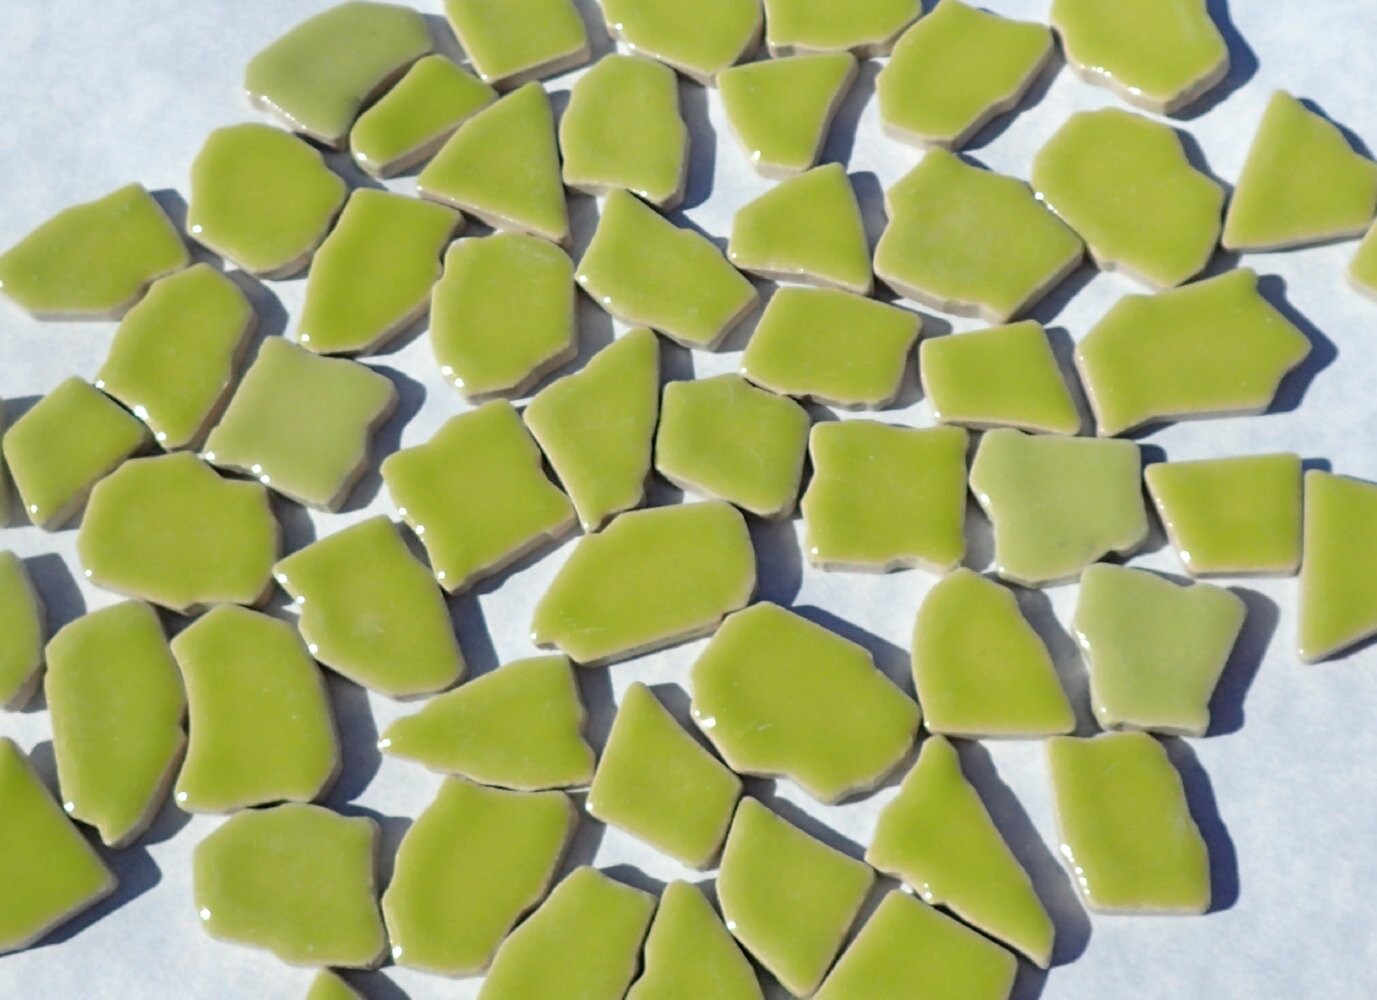 Kiwi Green Mosaic Ceramic Tiles - Jigsaw Puzzle Shaped Pieces - Half Pound - Assorted Sizes Random Shapes